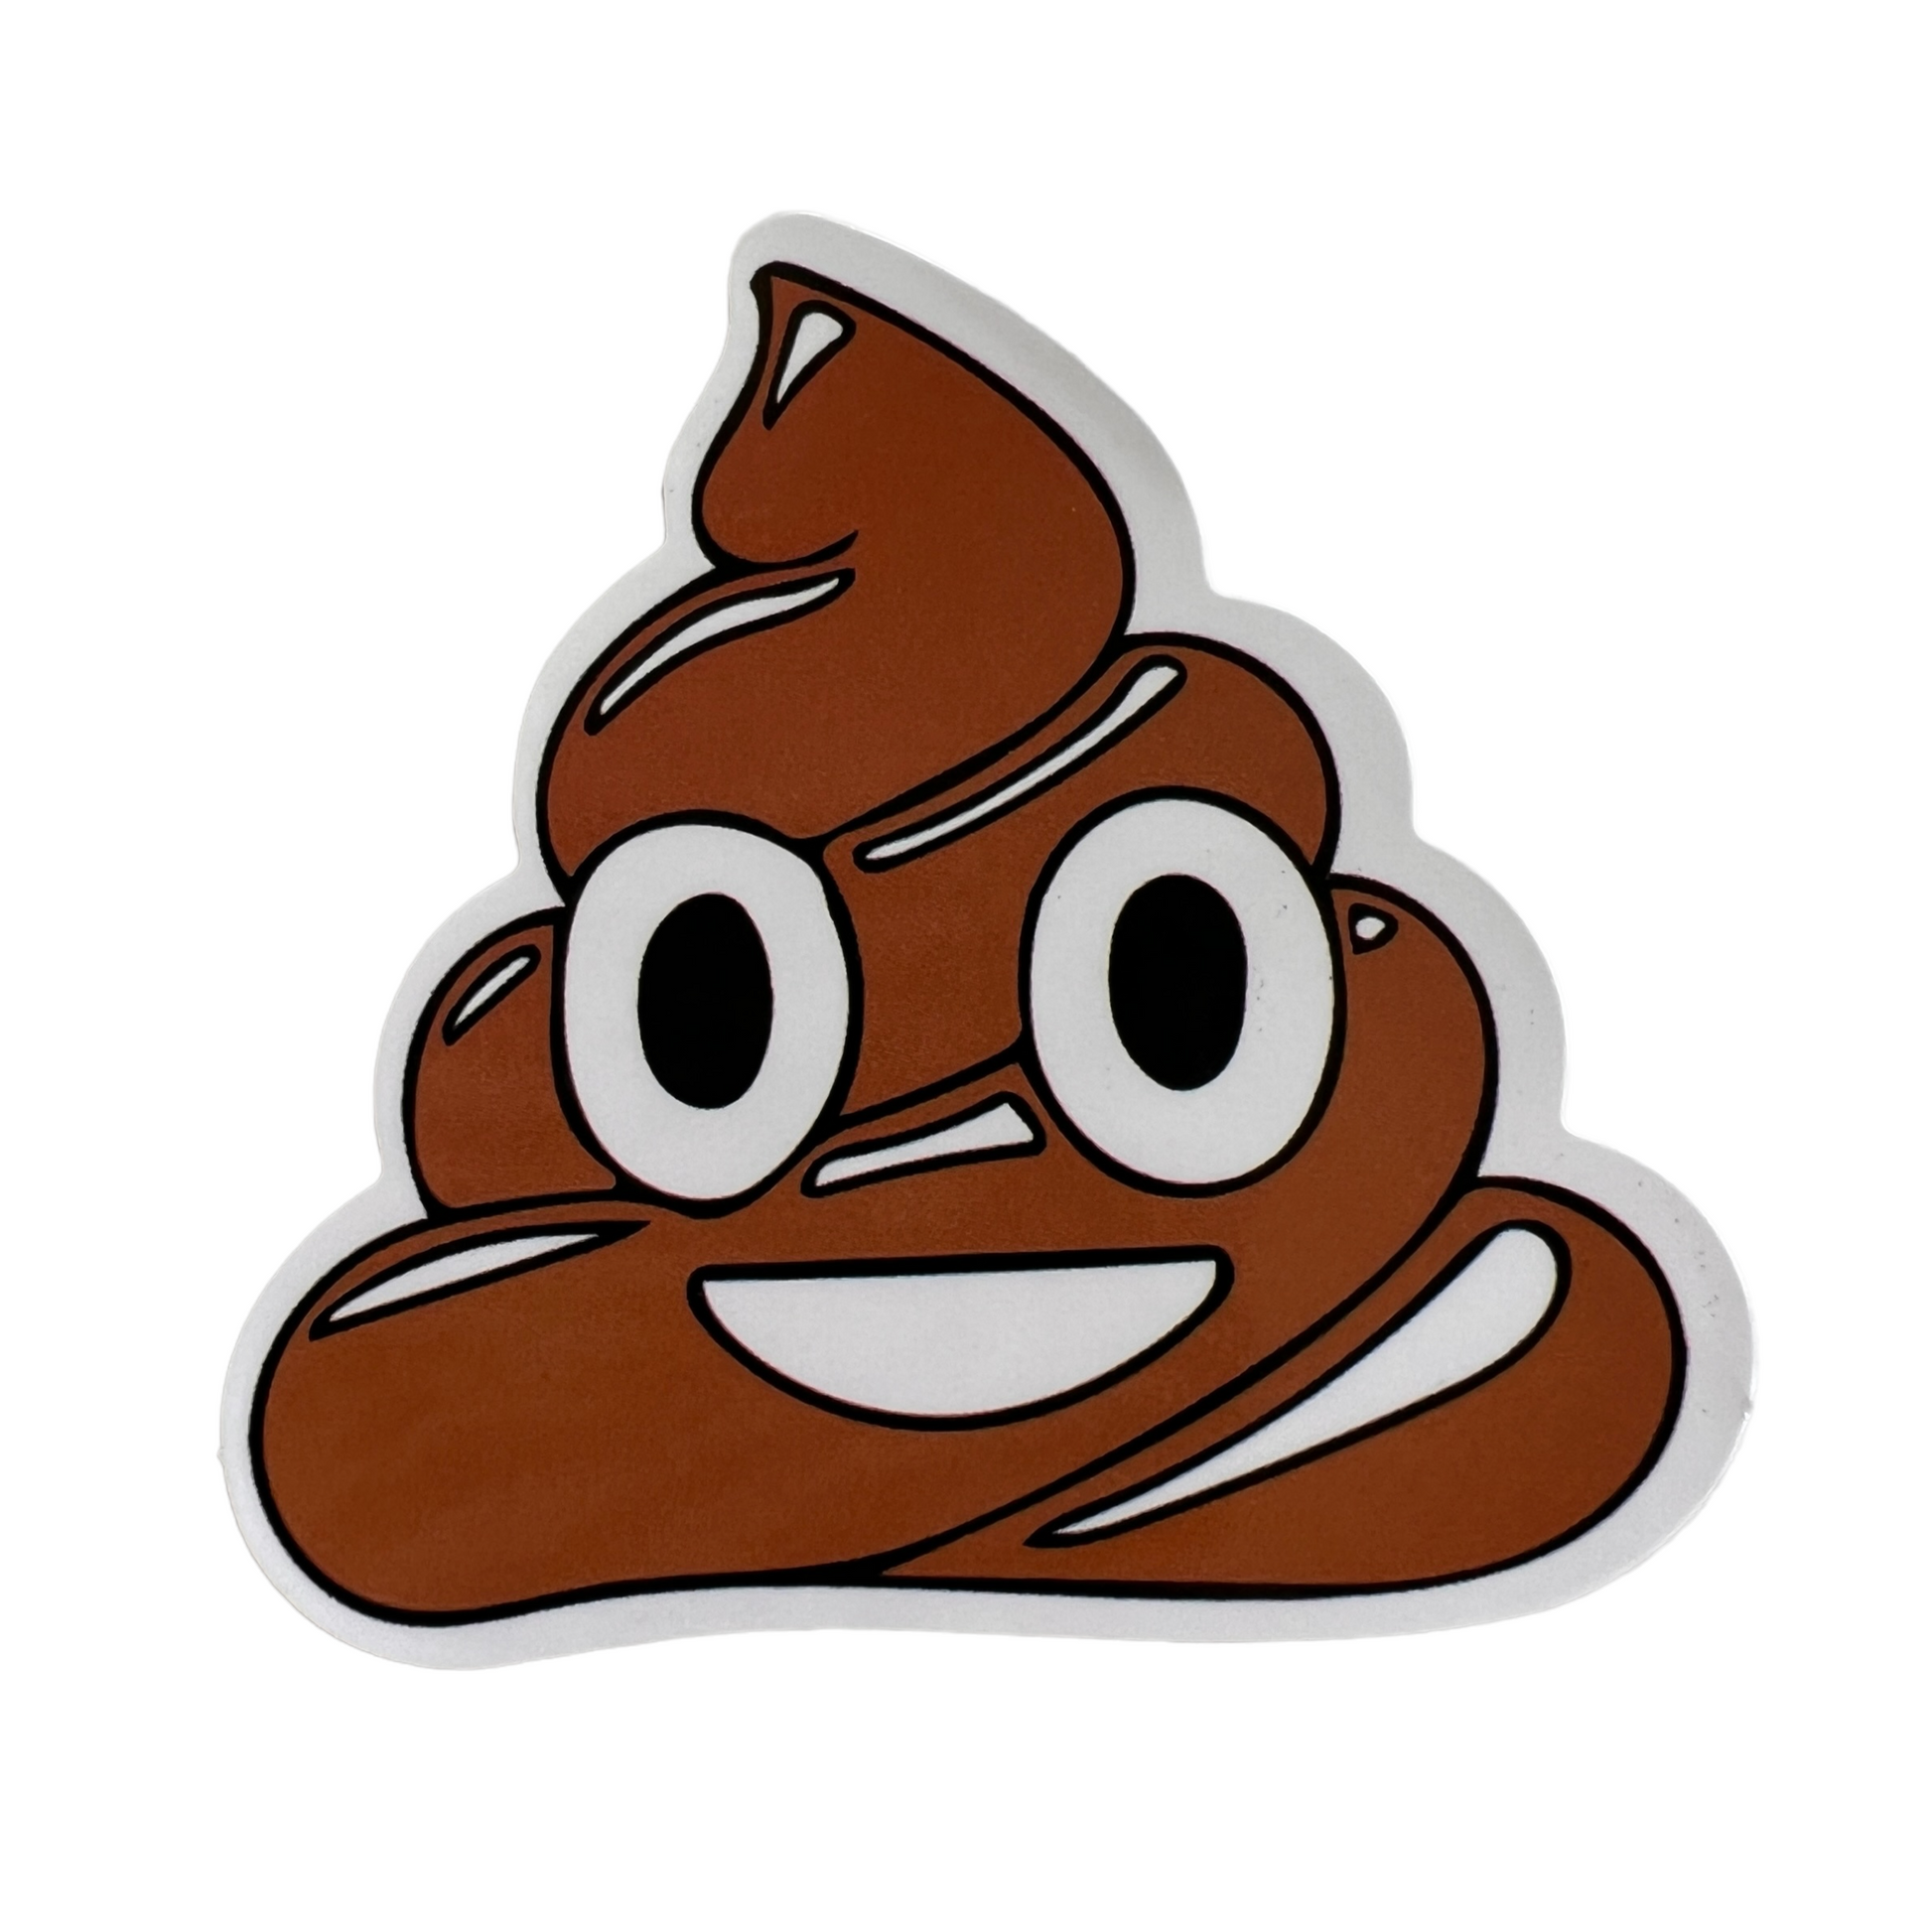 Poop Emoji Stickers Decorative Stickers SPIRIT SPARKPLUGS Single  